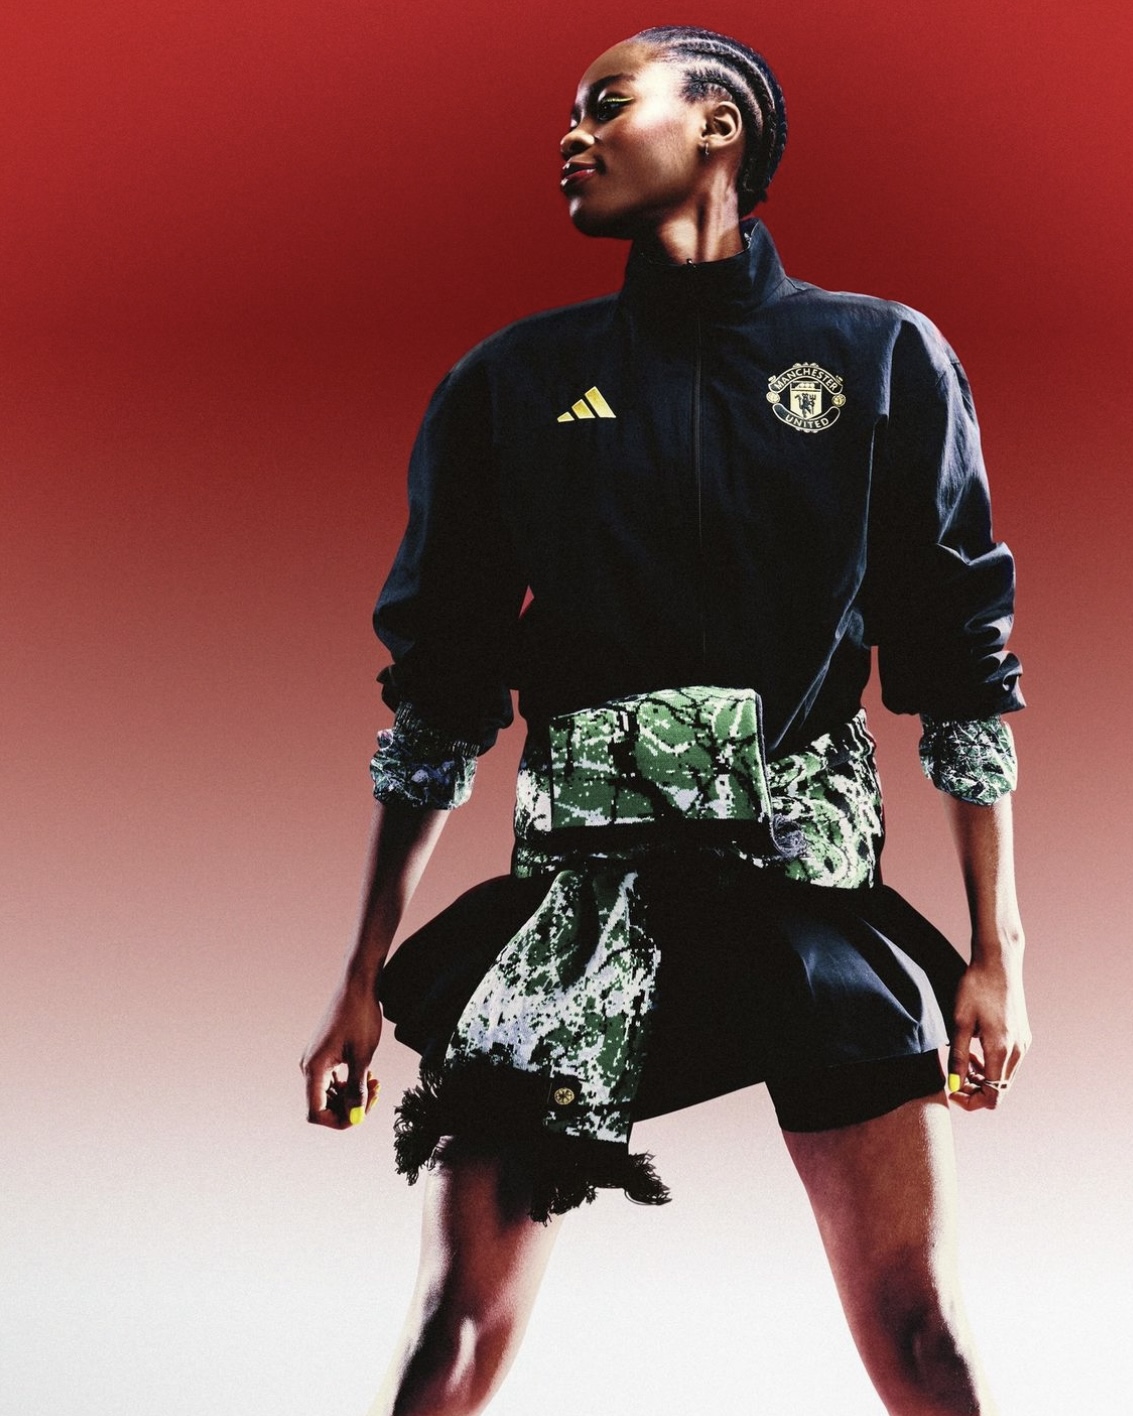 Adidas & Manchester United x Stone Roses